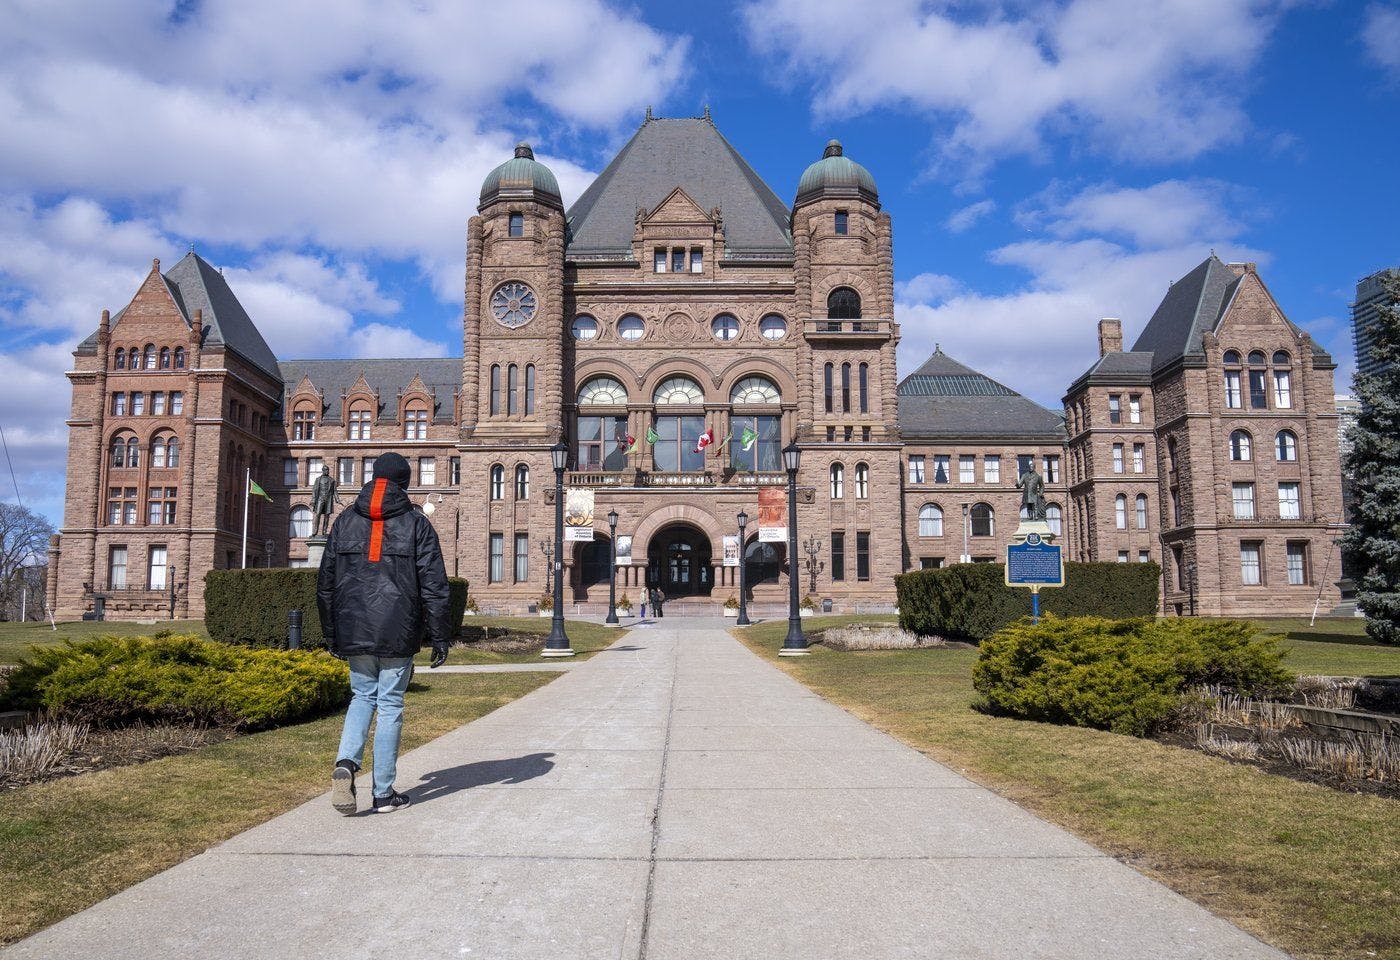 Ontario legislature resumes; opposition parties say Greenbelt questions linger